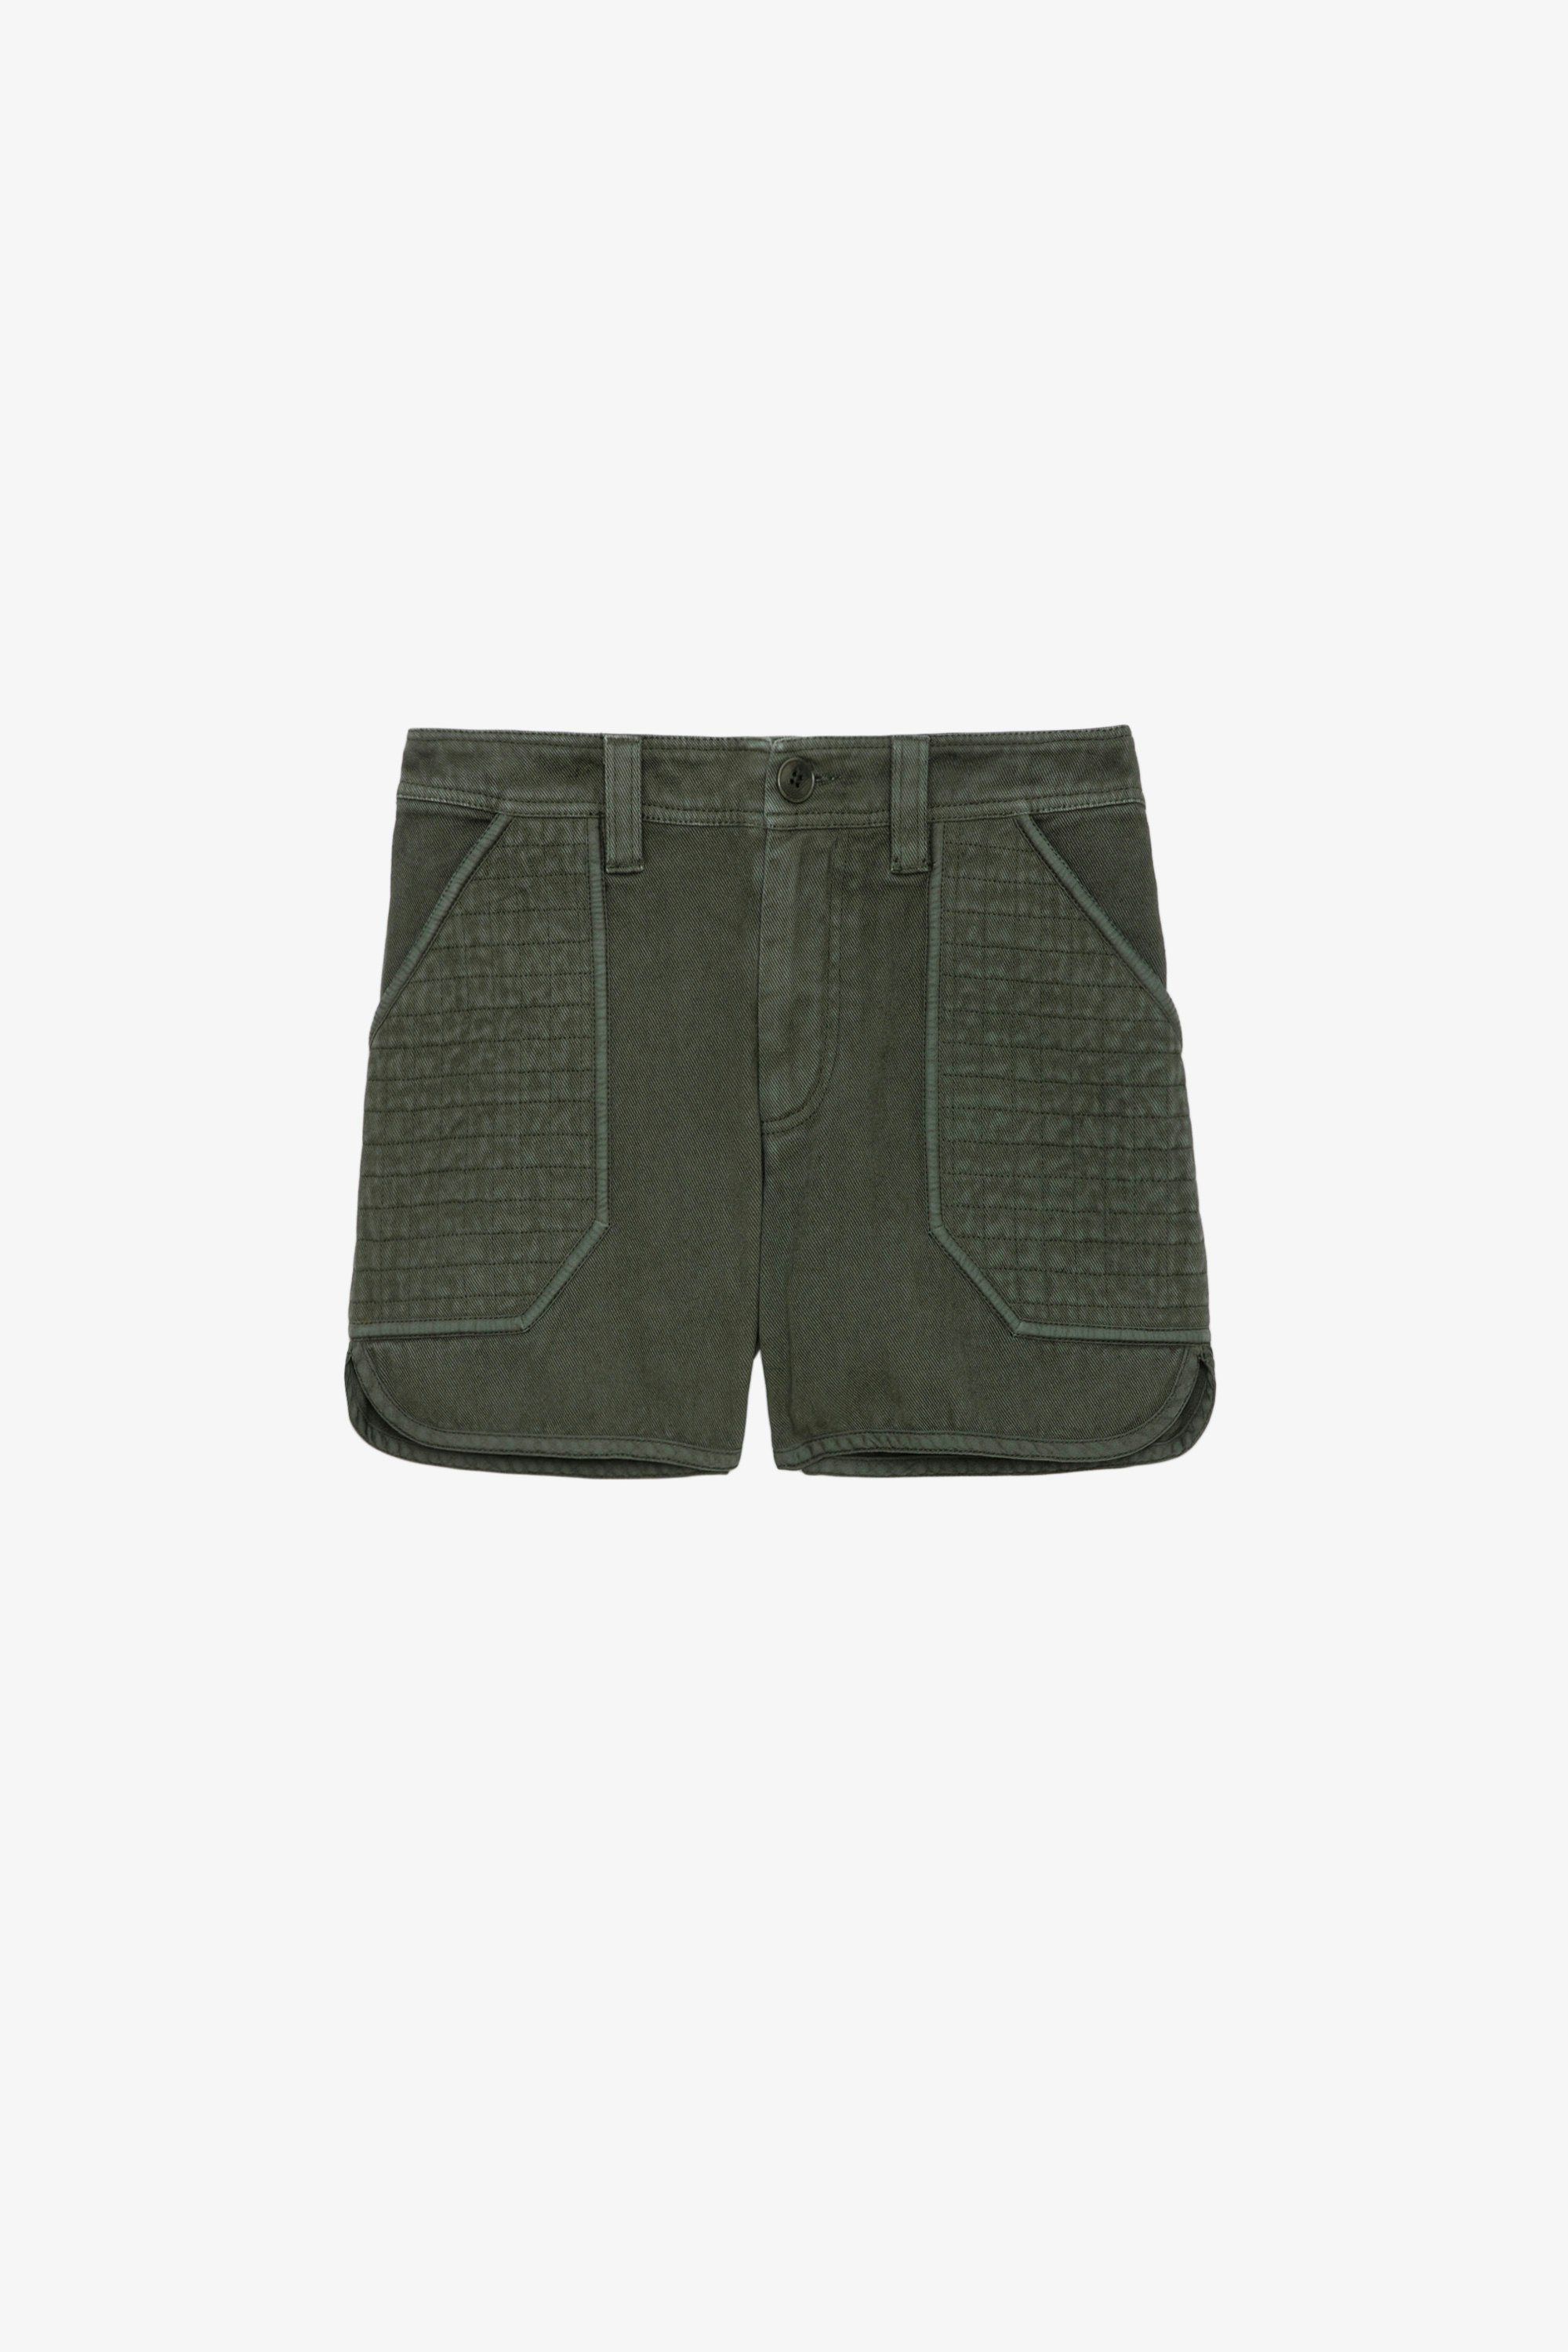 Sei Shorts - Khaki cotton twill shorts with pockets and textured panels.